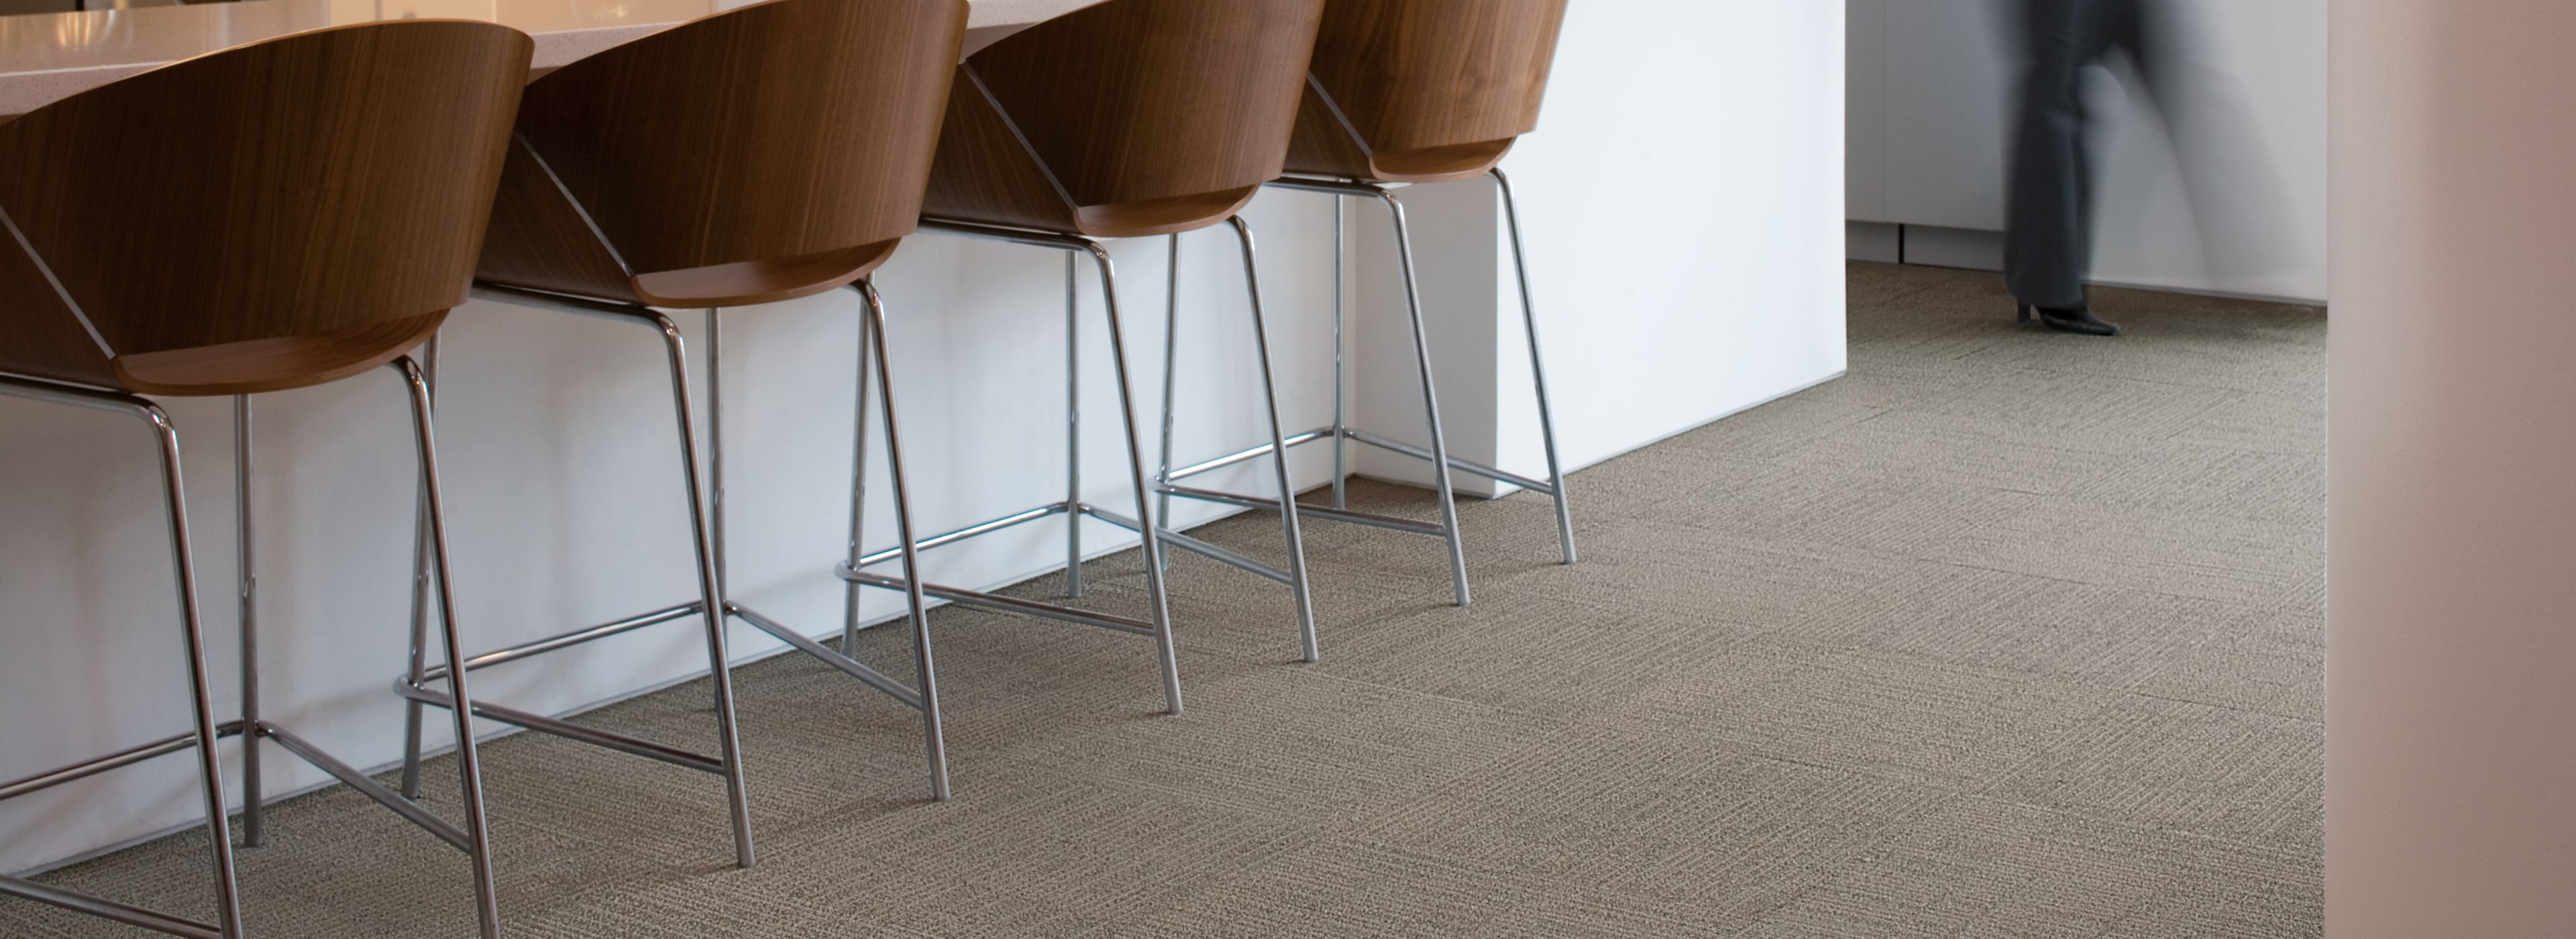 Interface Brescia carpet tile in office break area imagen número 1